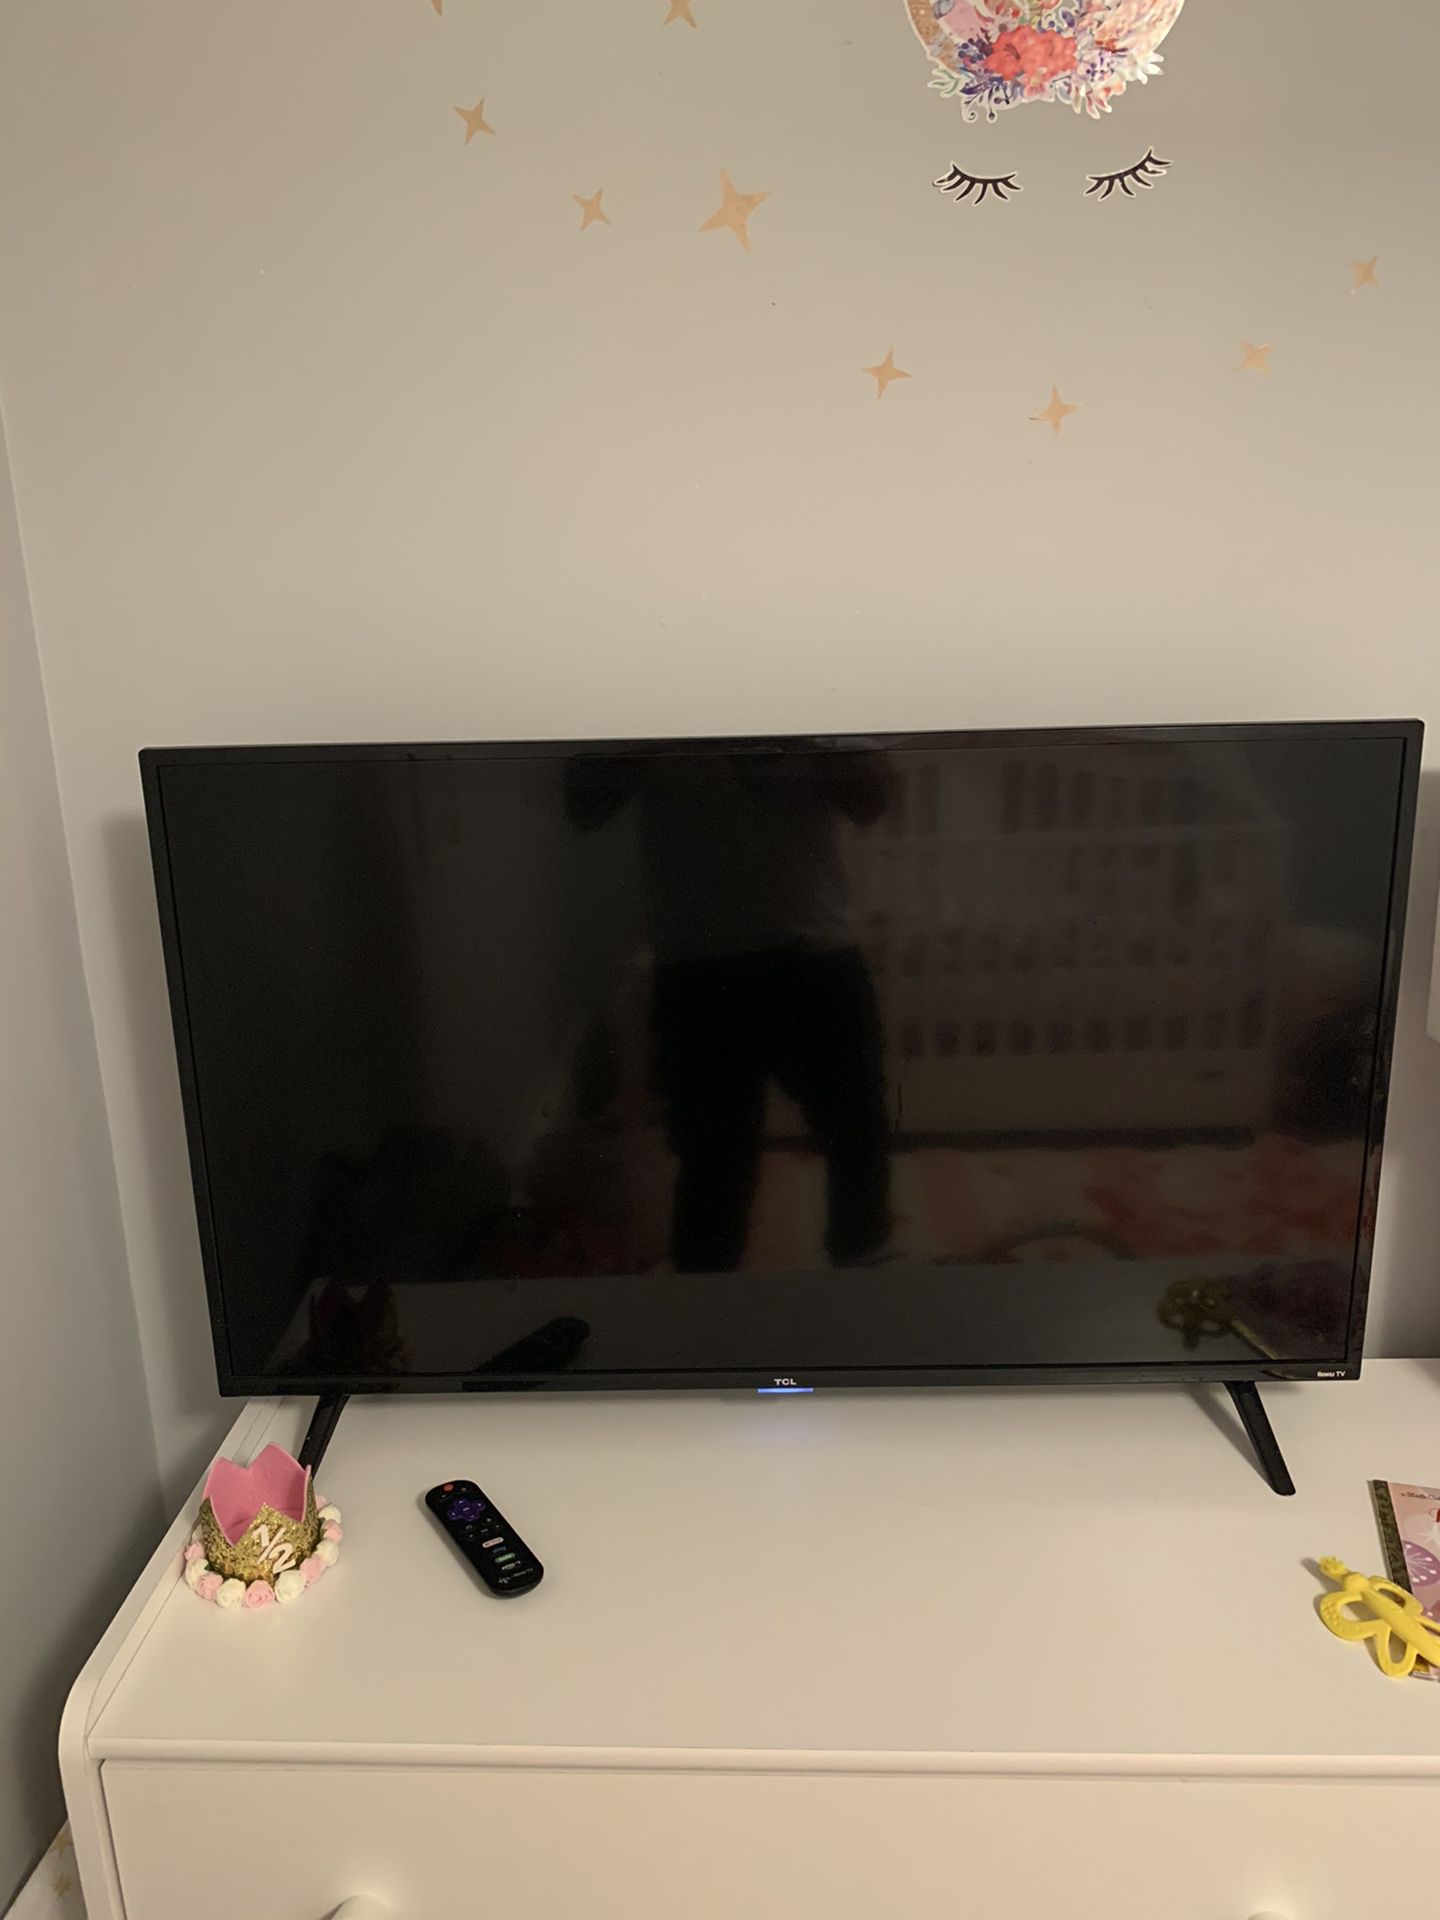 40 inch roku smart tv 100$ like new